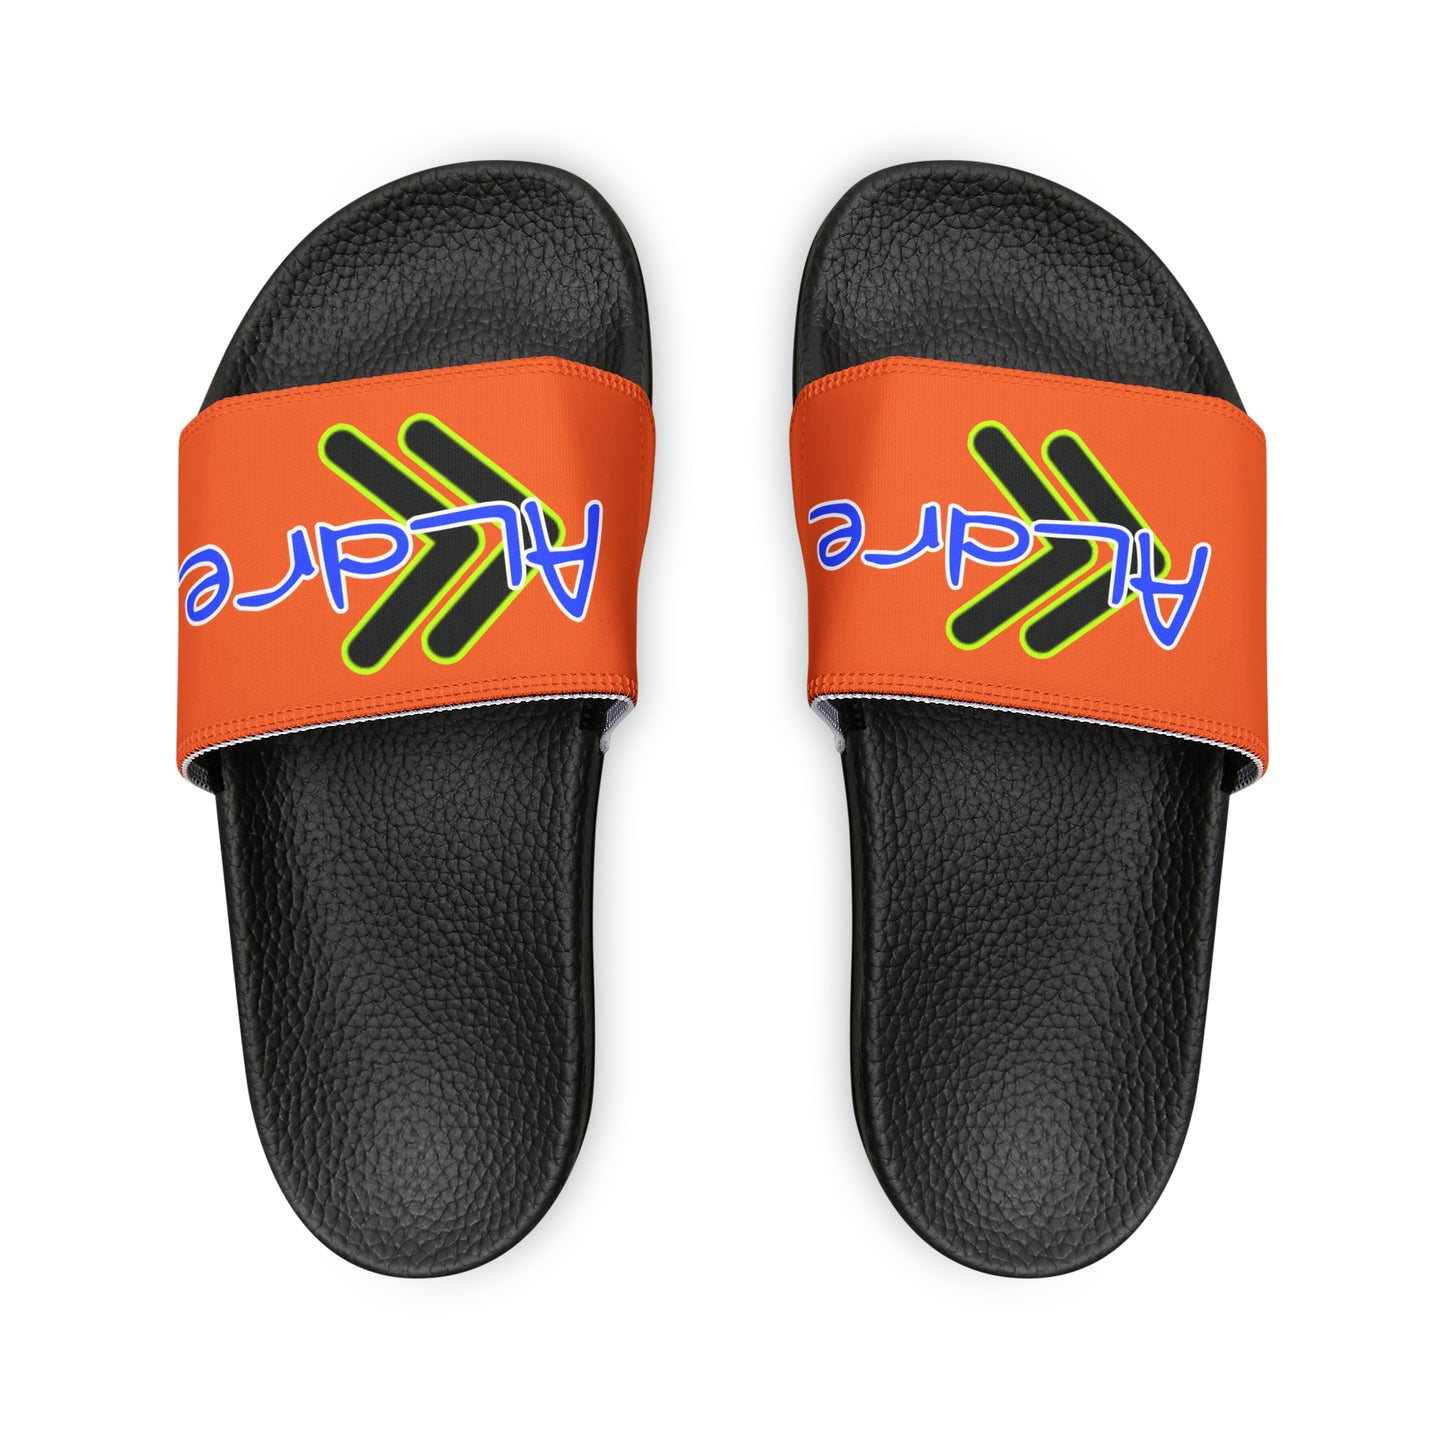 Men's Neon & Blue ALdre Slide Sandals (Orange)